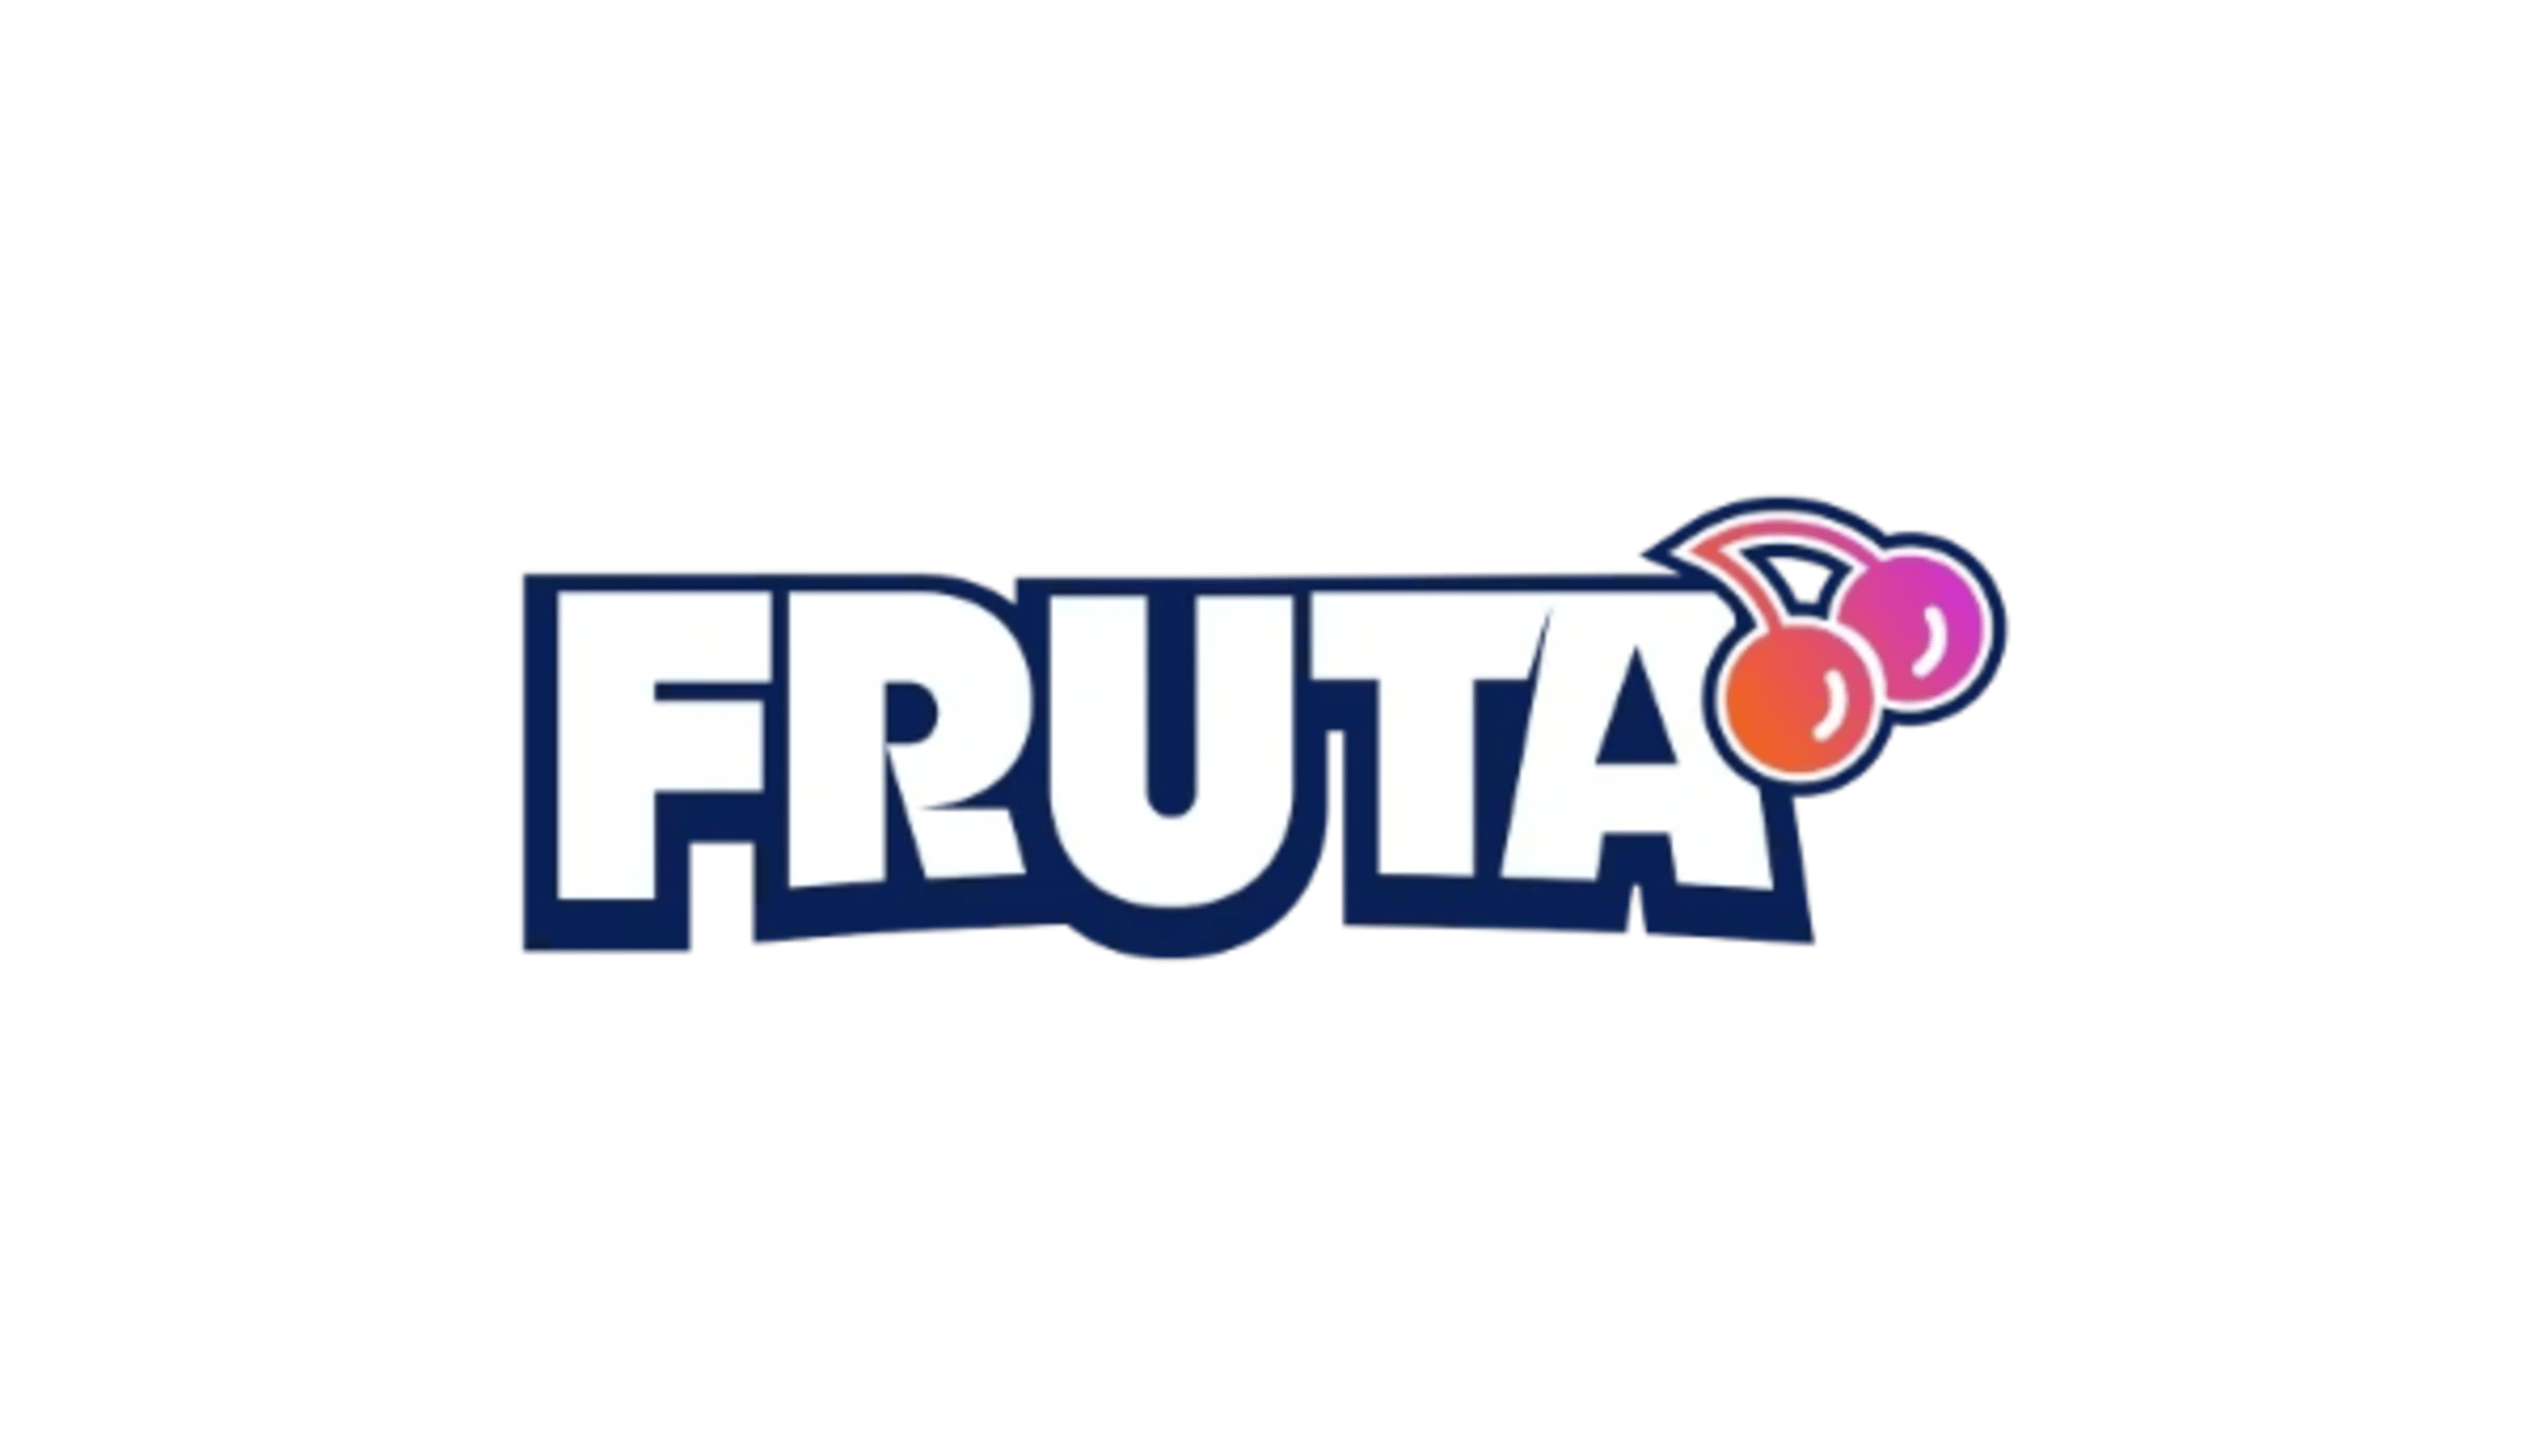 Fruta Casino